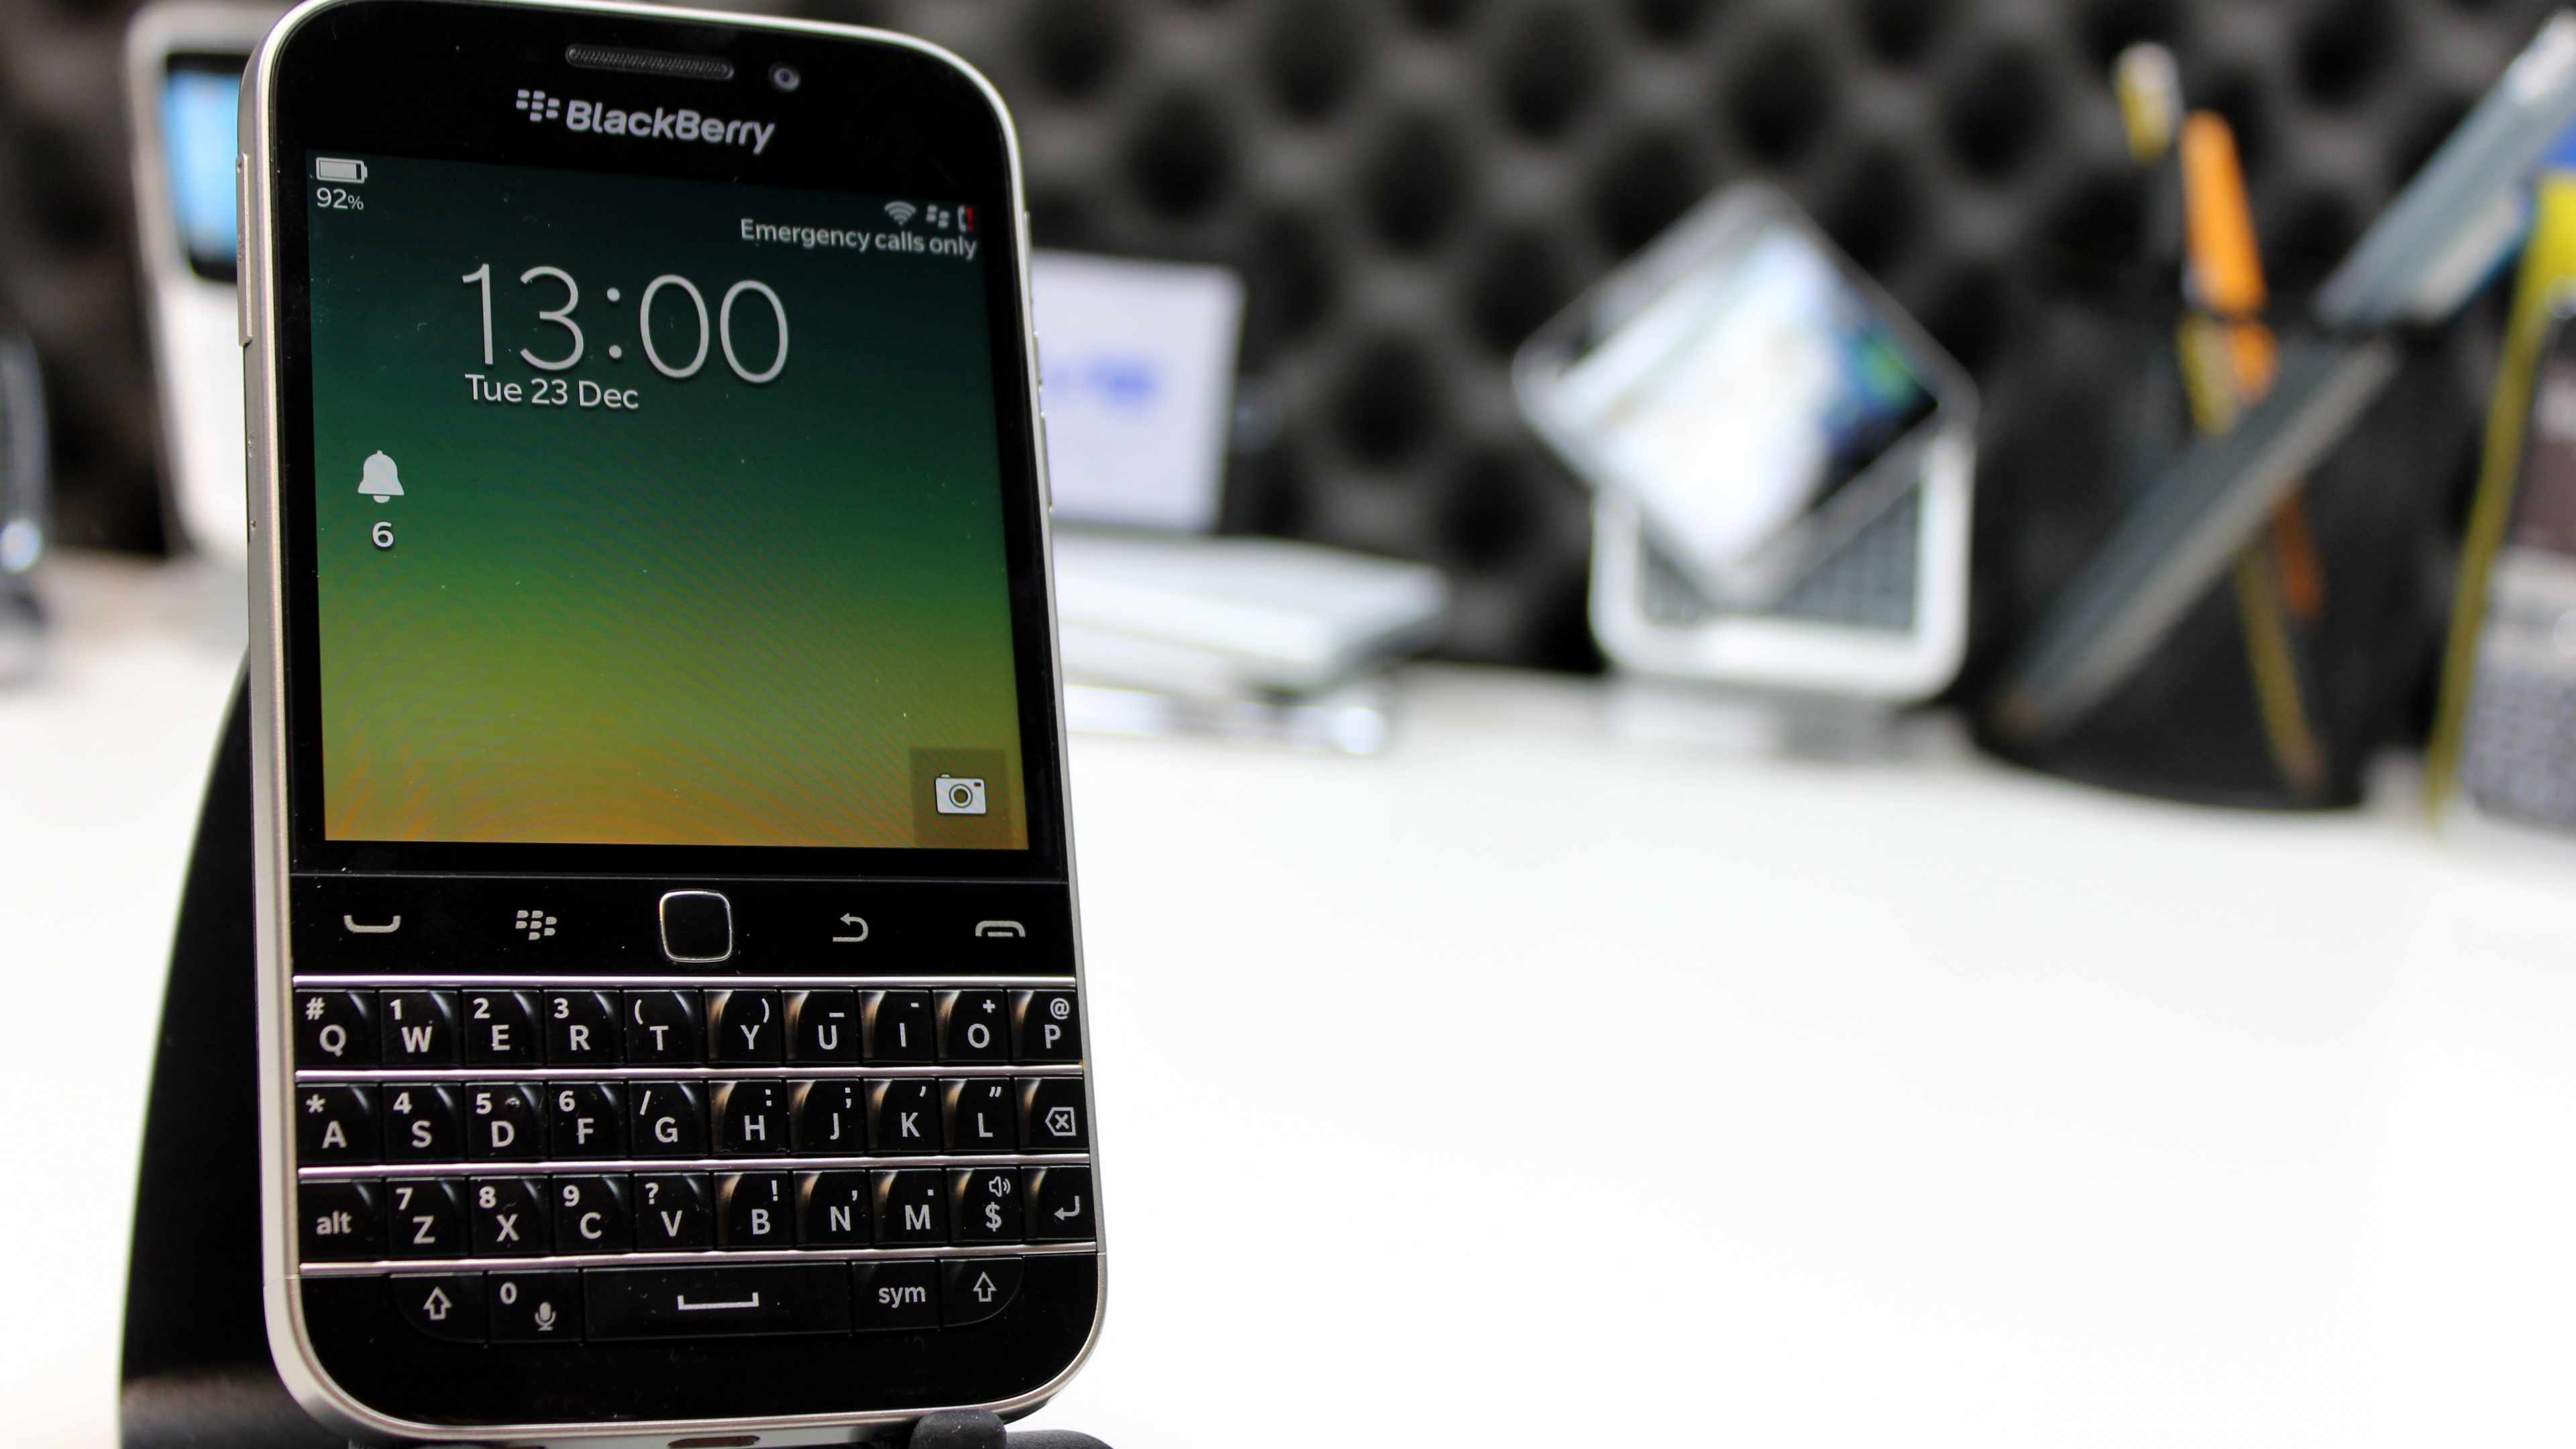 BlackBerry Curve 9360 Hands-On Photos